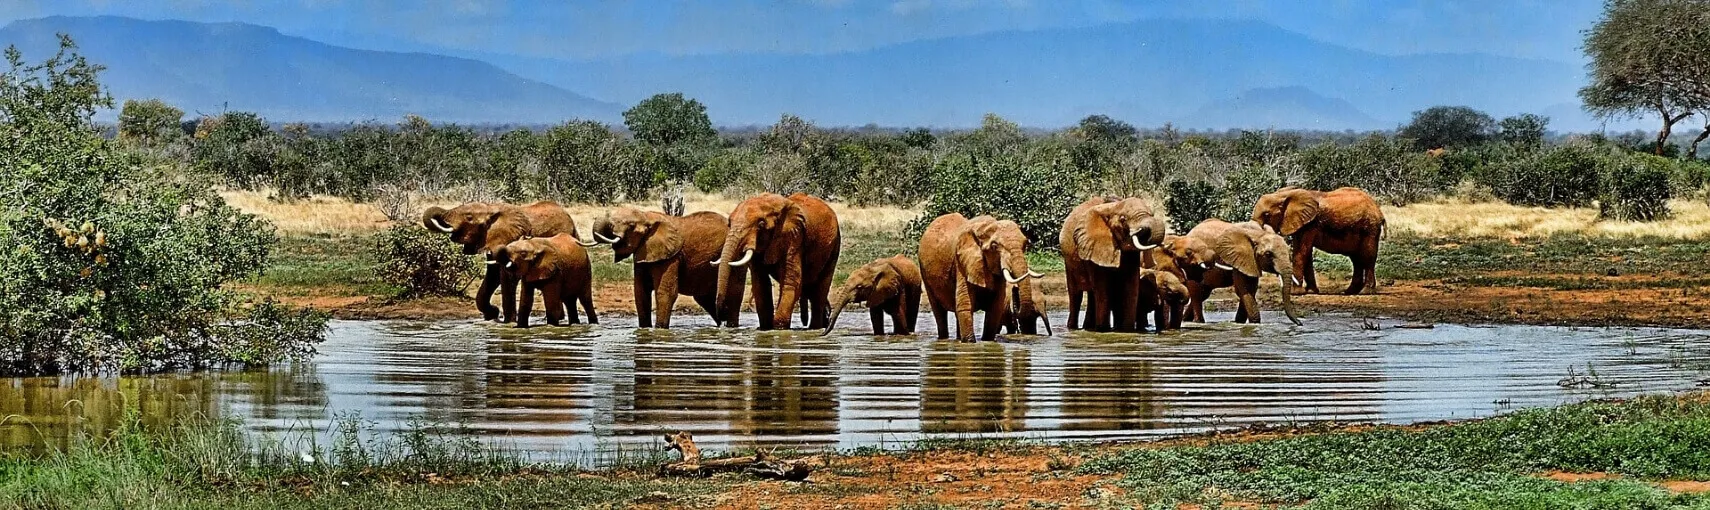 Elefanten am Wasserloch in Südafrika